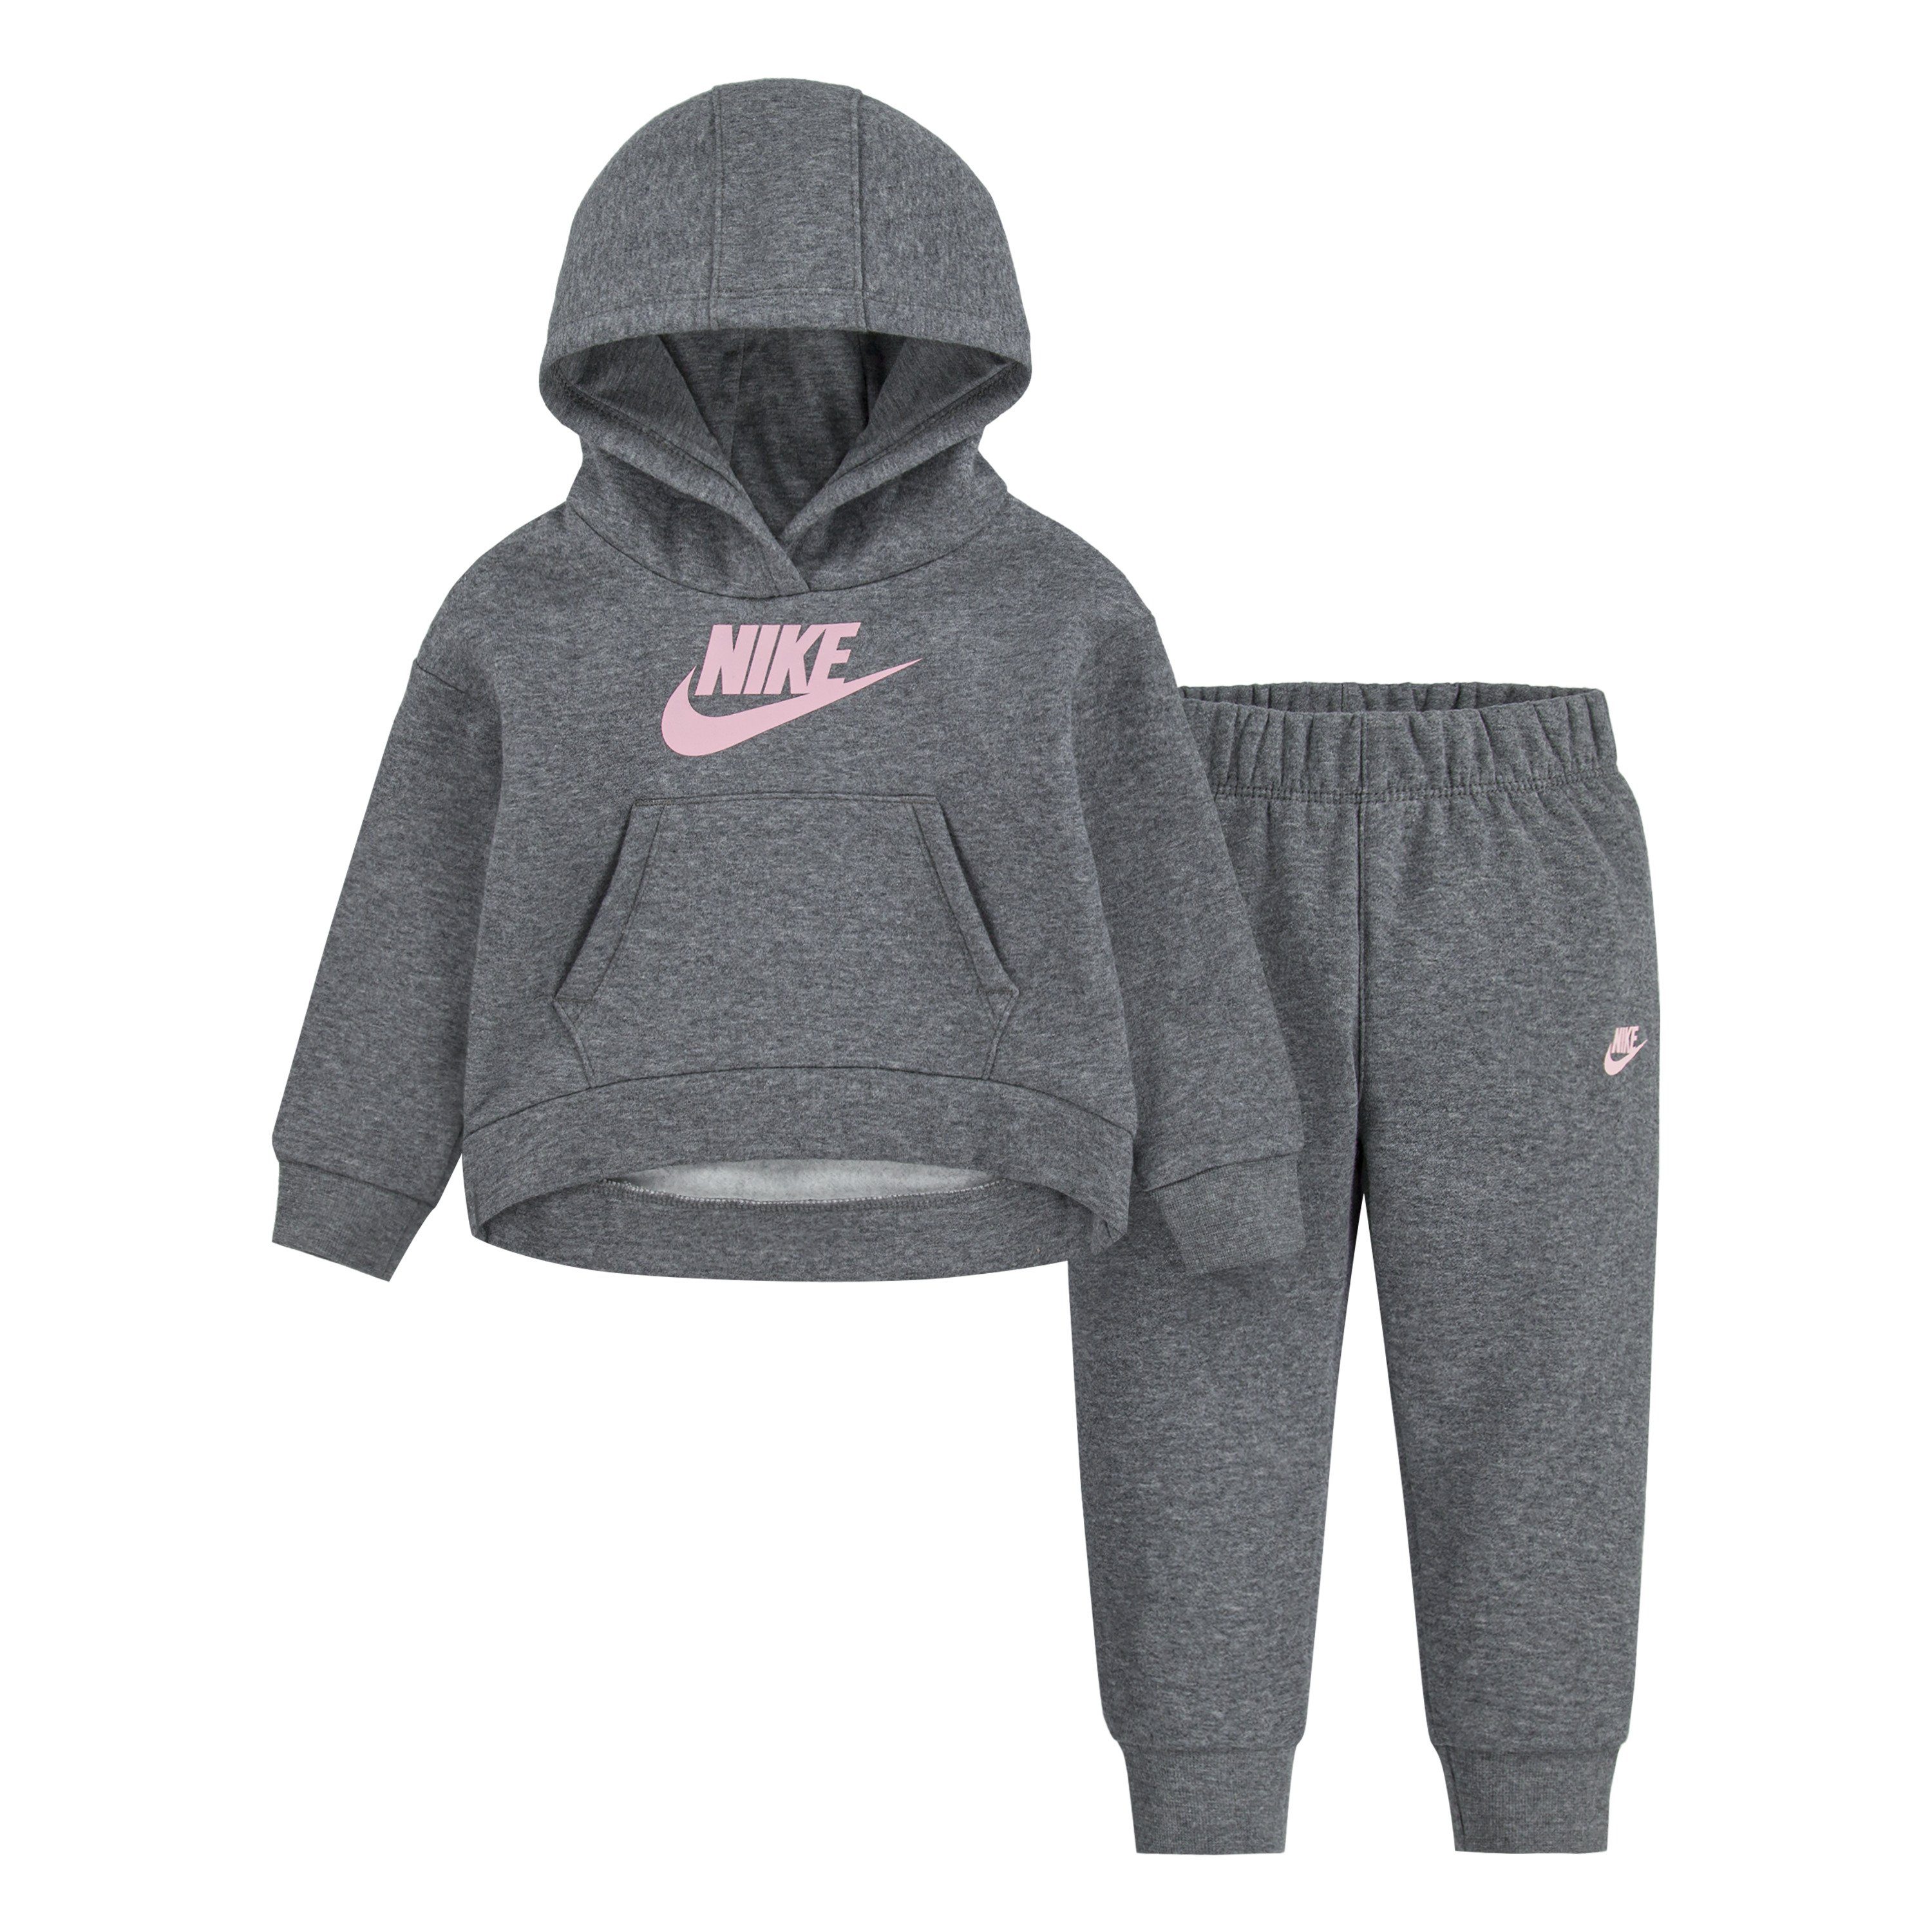 CLUB FLEECE SET Sportswear Nike Jogginganzug grau-meliert